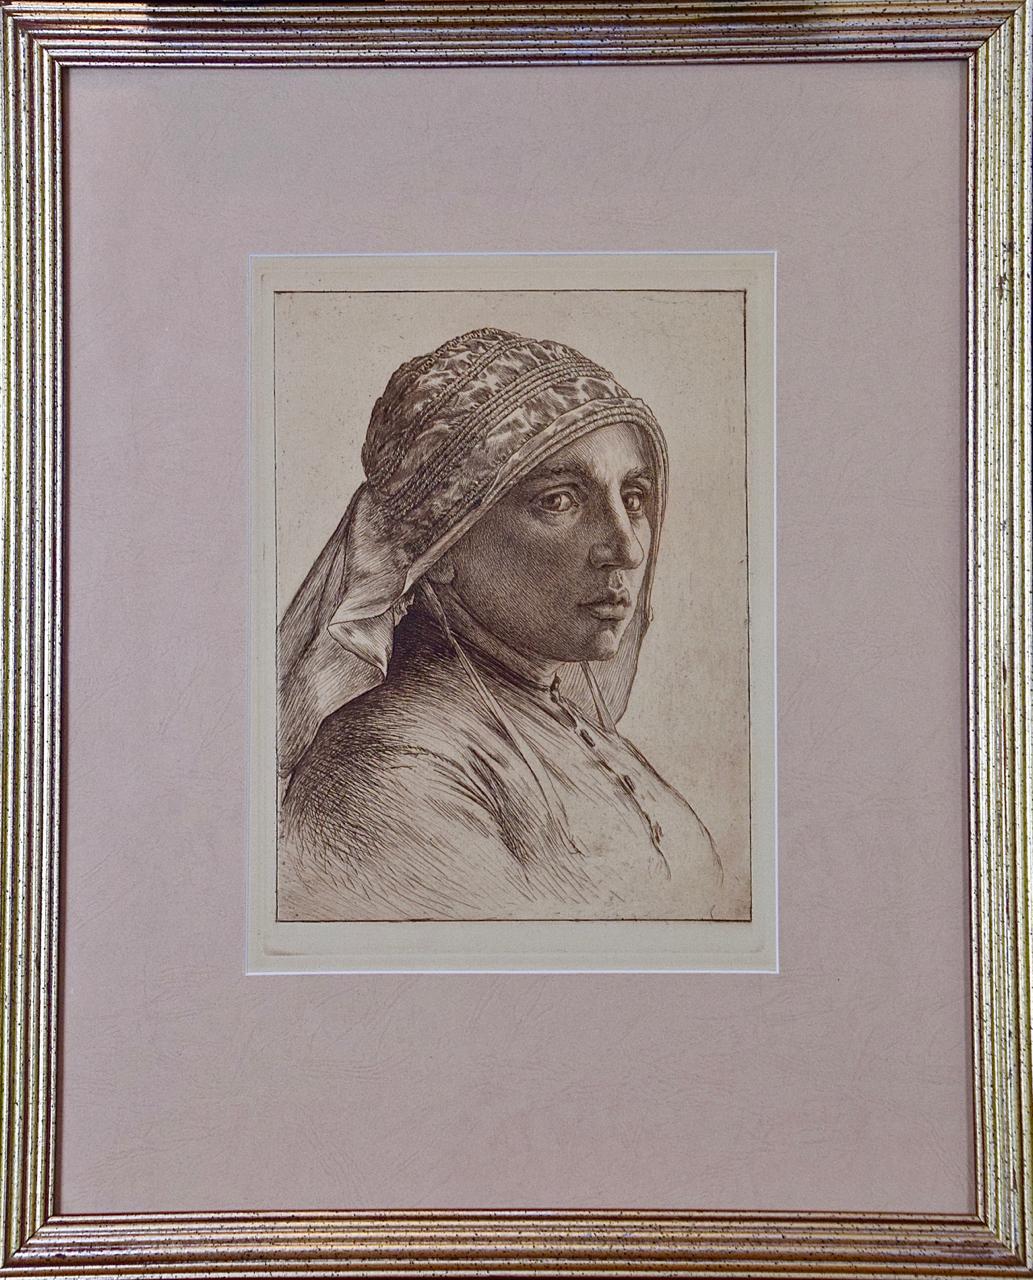  George Woolliscroft Rhead  Portrait Print - A Portrait of a Pensive Woman in a Head Scarf: An Etching by George Rhead